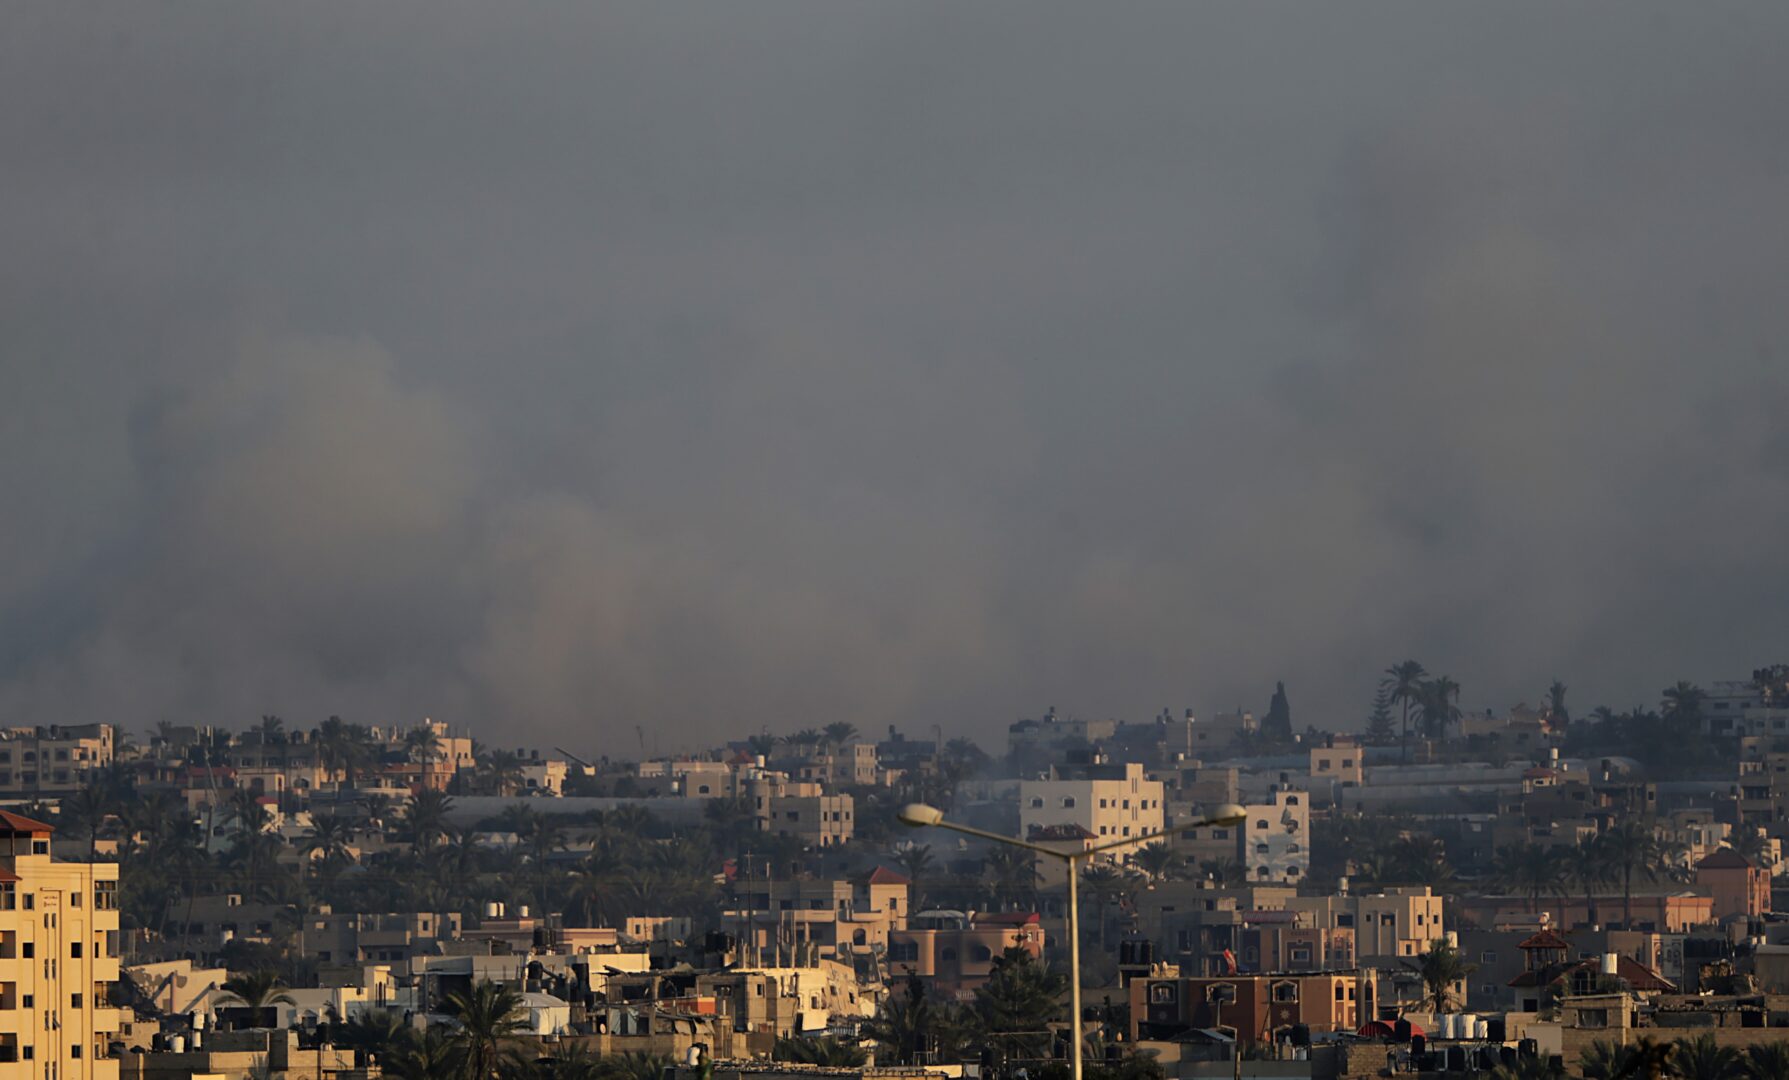 Хамас: Поради бомбардирањето изгубивме контакт со одговорните за 5 израелски заложници